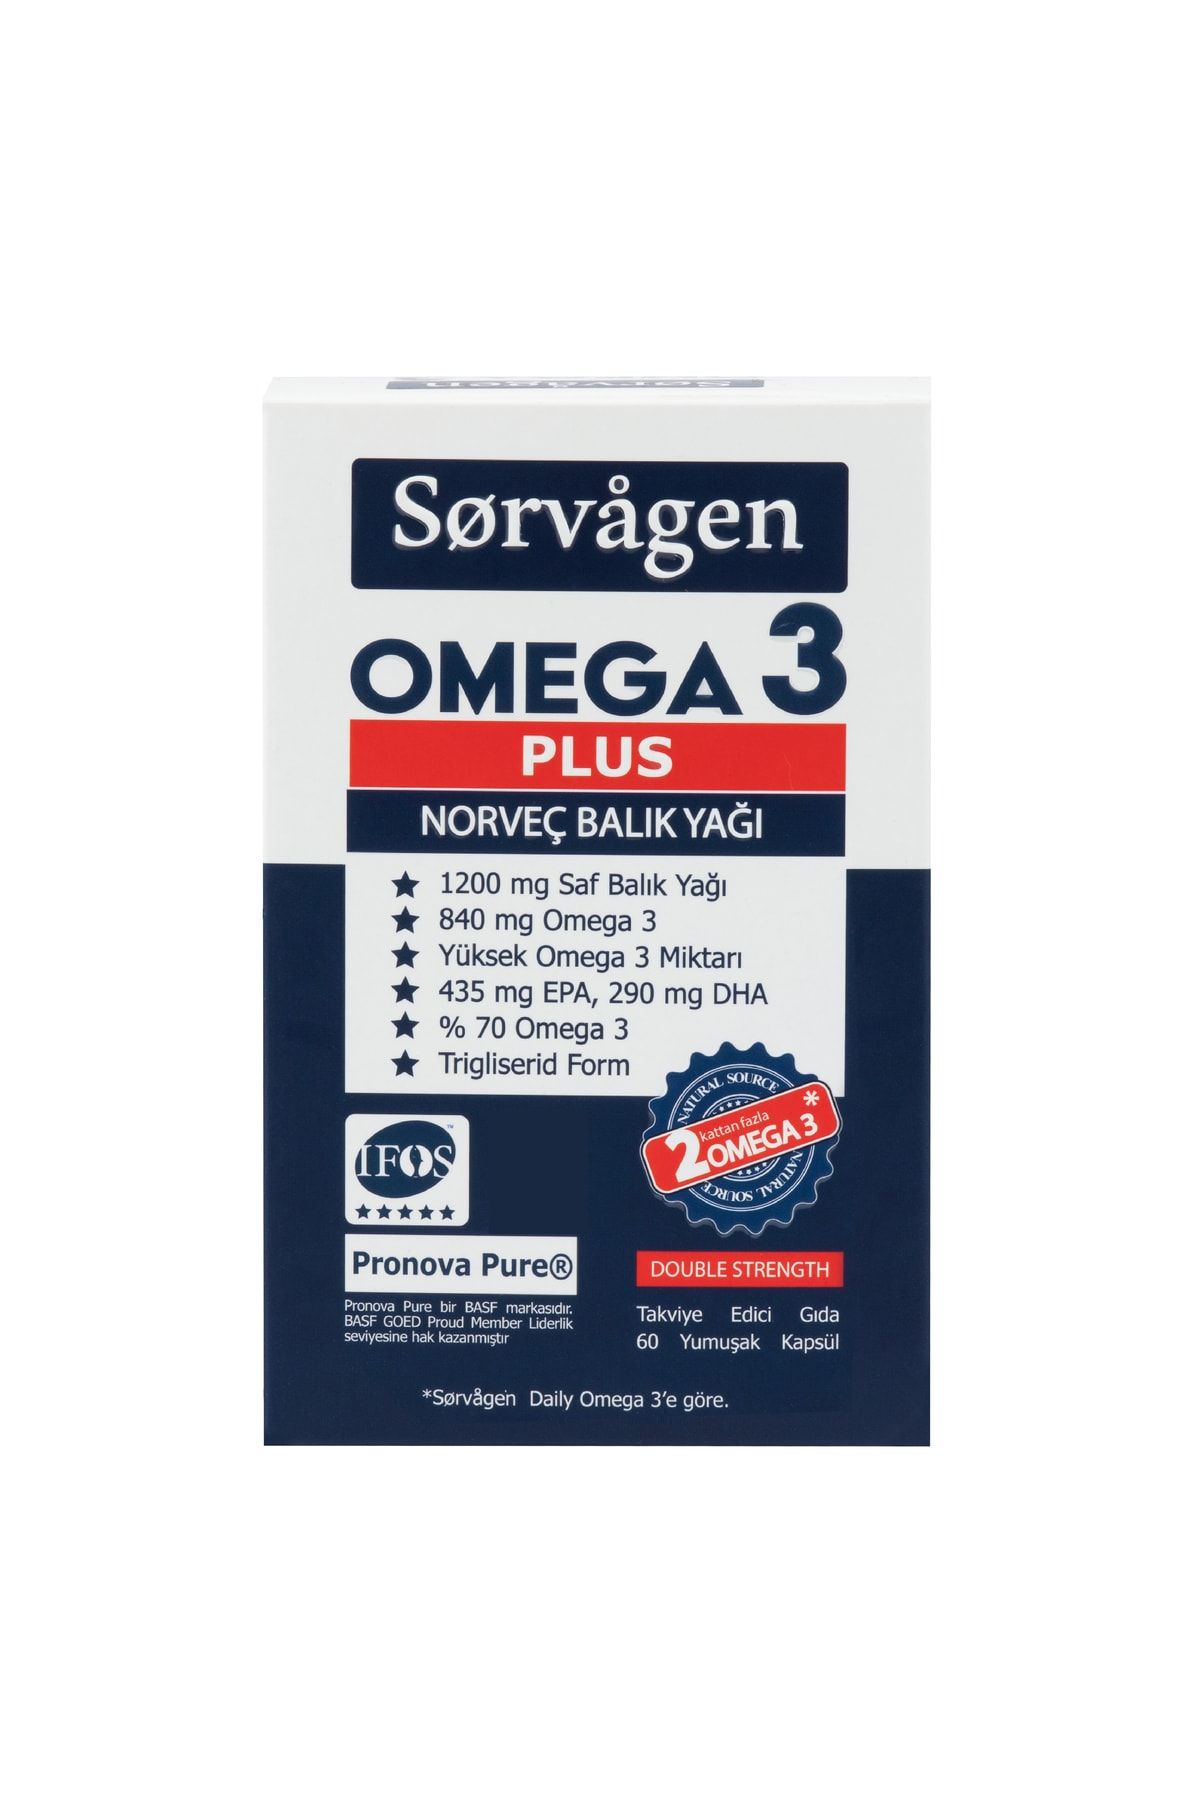 Sorvagen Omega 3 Plus Saf Norveç Balık Yağı, 60 Kapsül, 1200mg